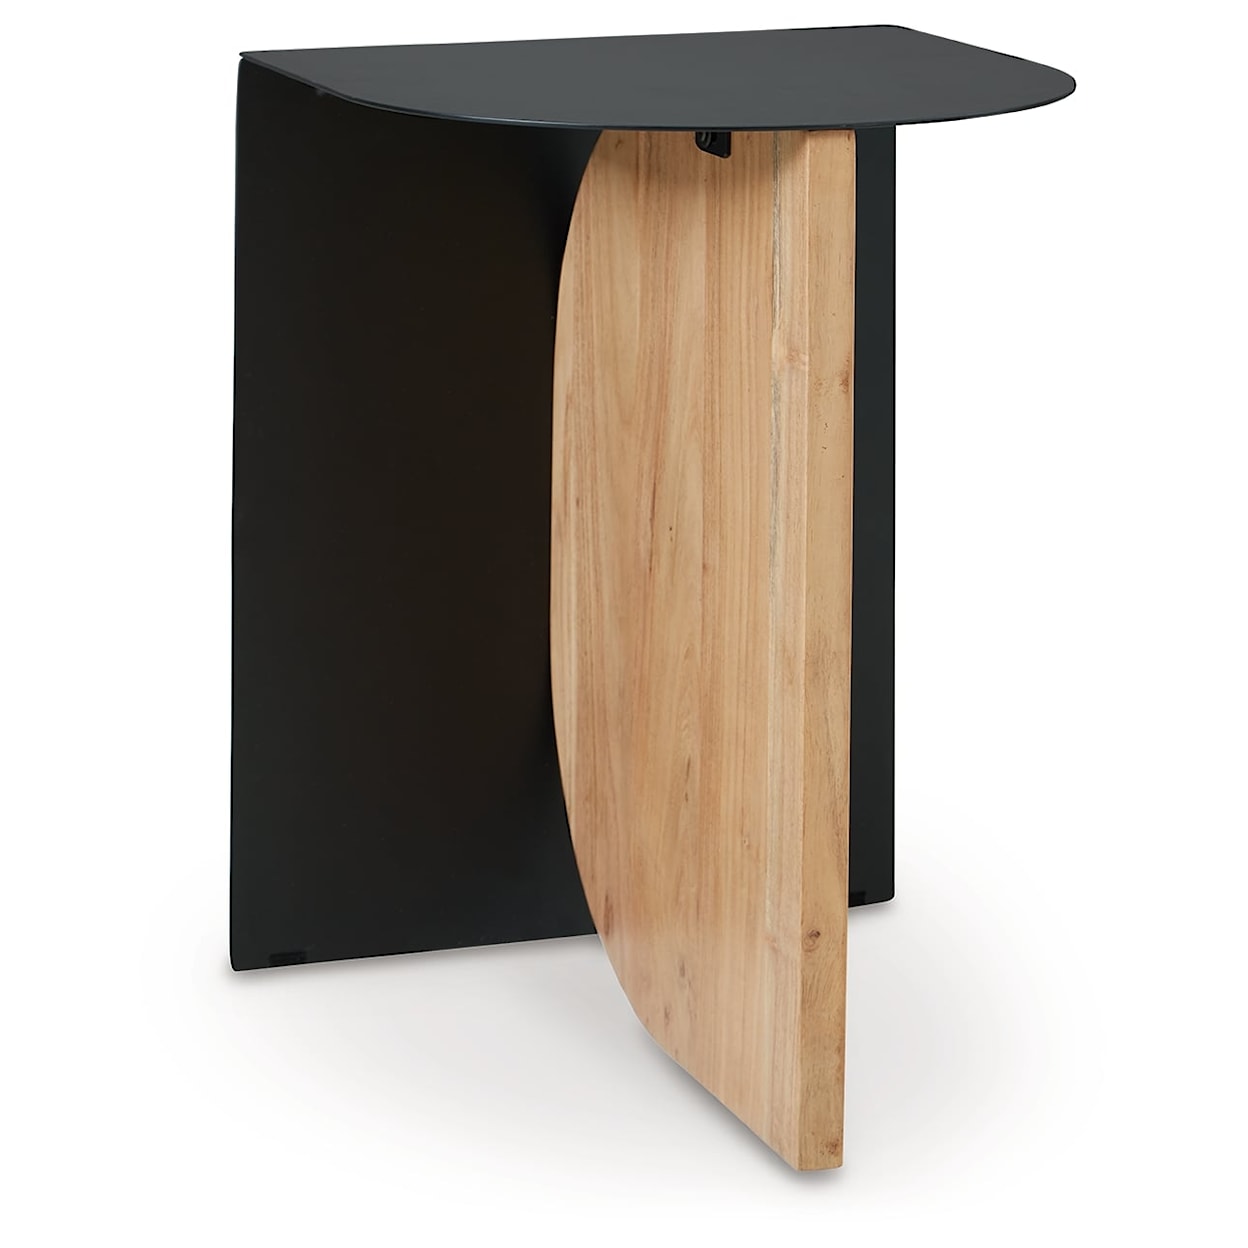 Ashley Furniture Signature Design Ladgate Accent Table